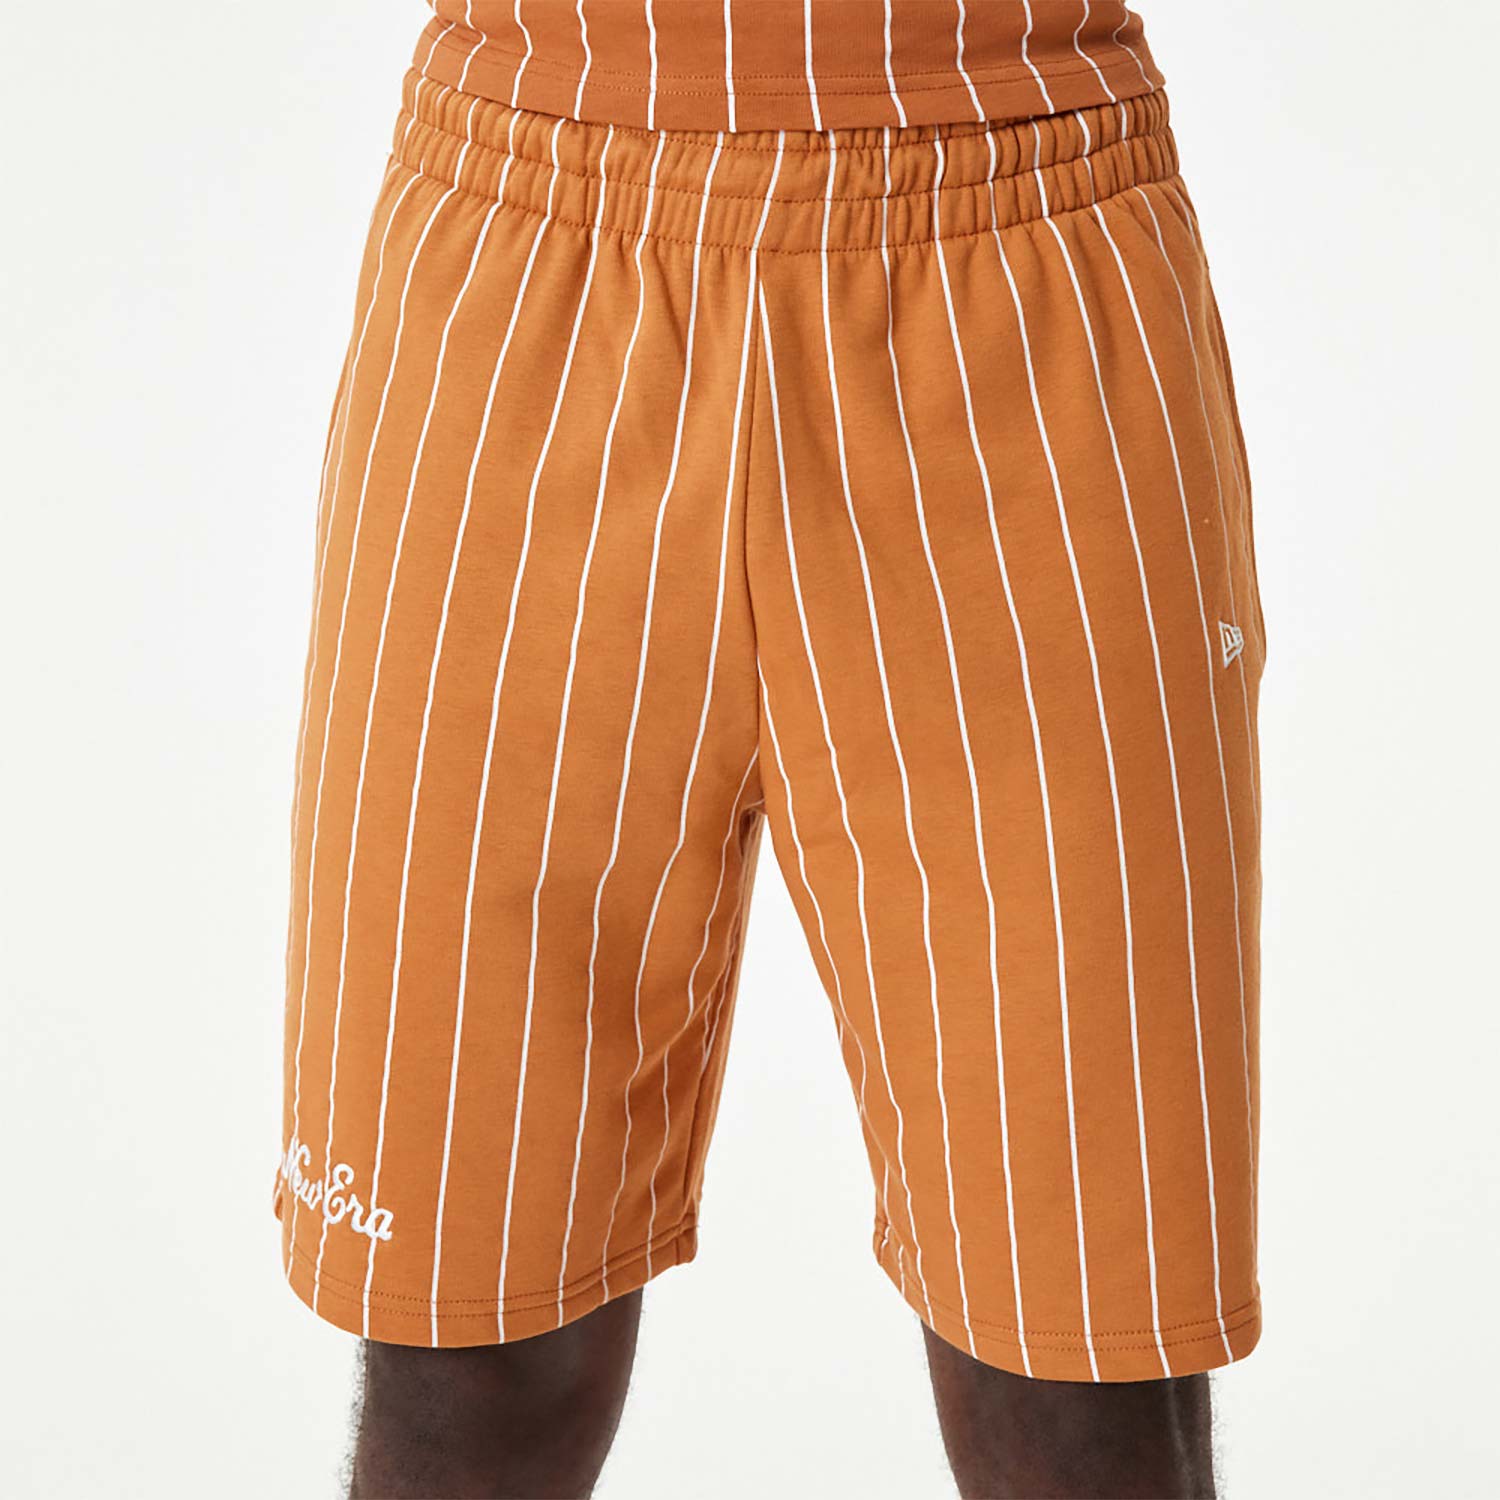 New Era Pinstripe Orange Shorts